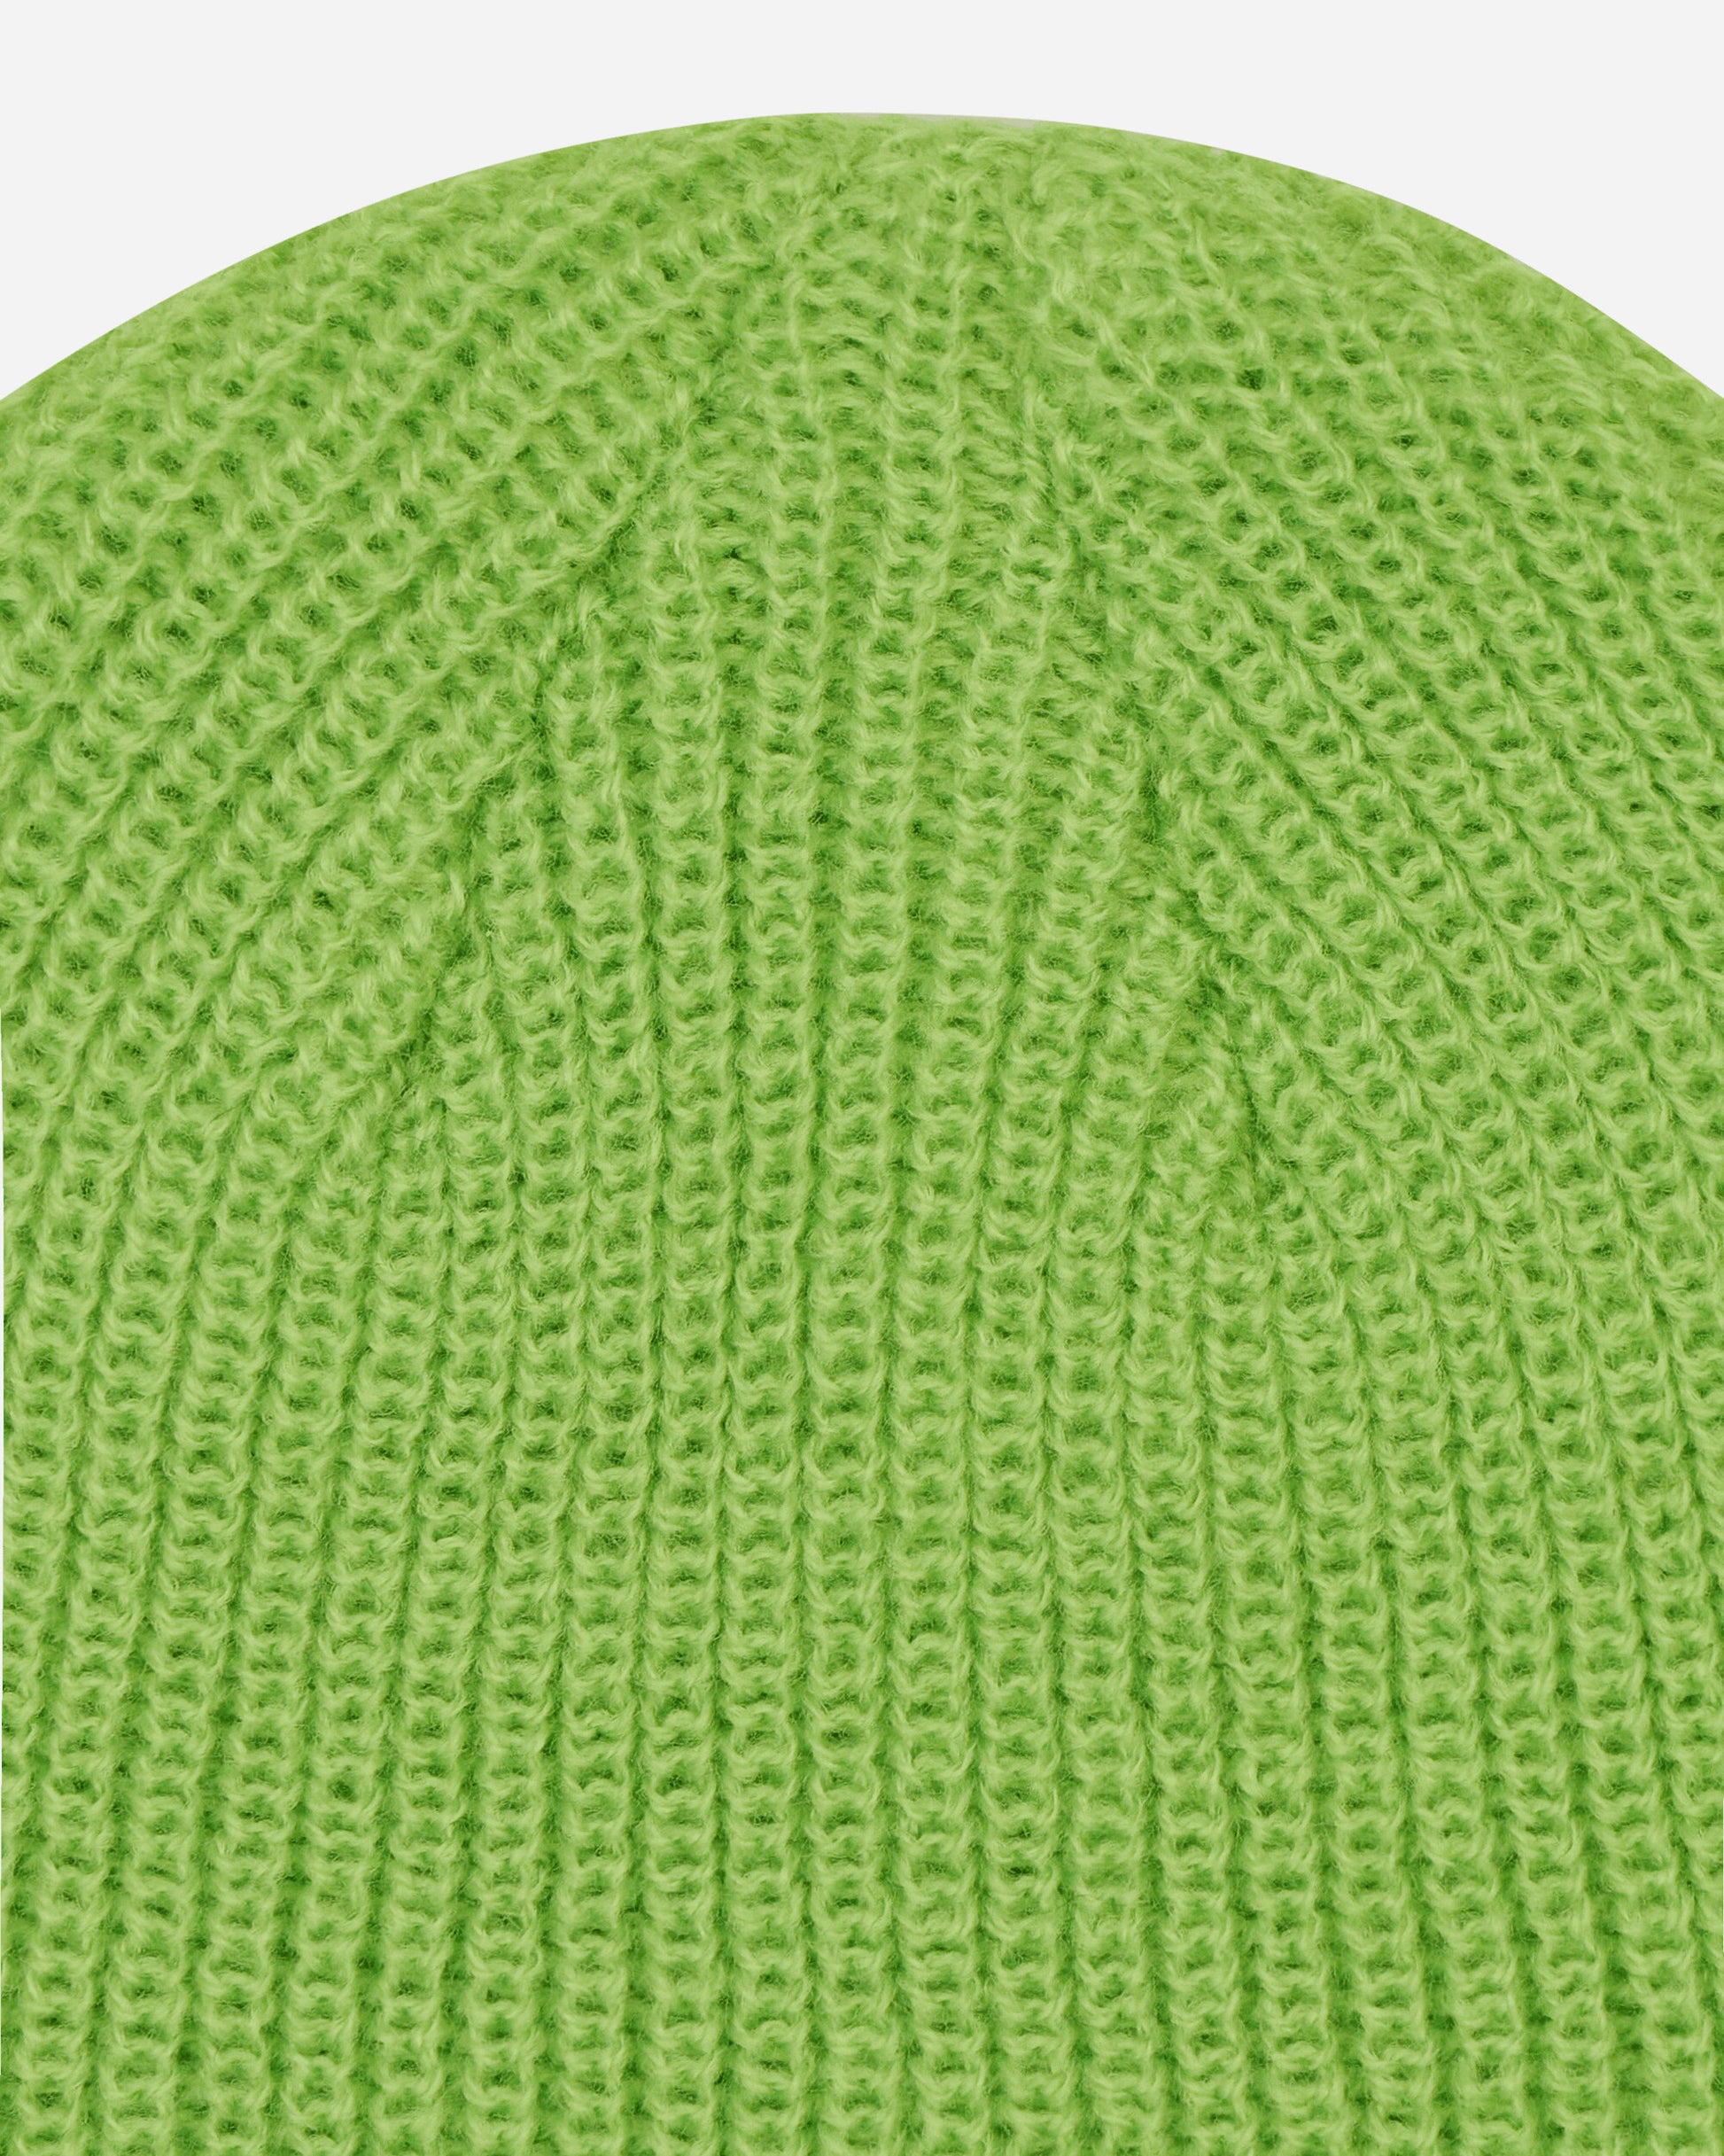 Stüssy Basic Cuff Beanie Bright Green Hats Beanies 1321019 BGRE